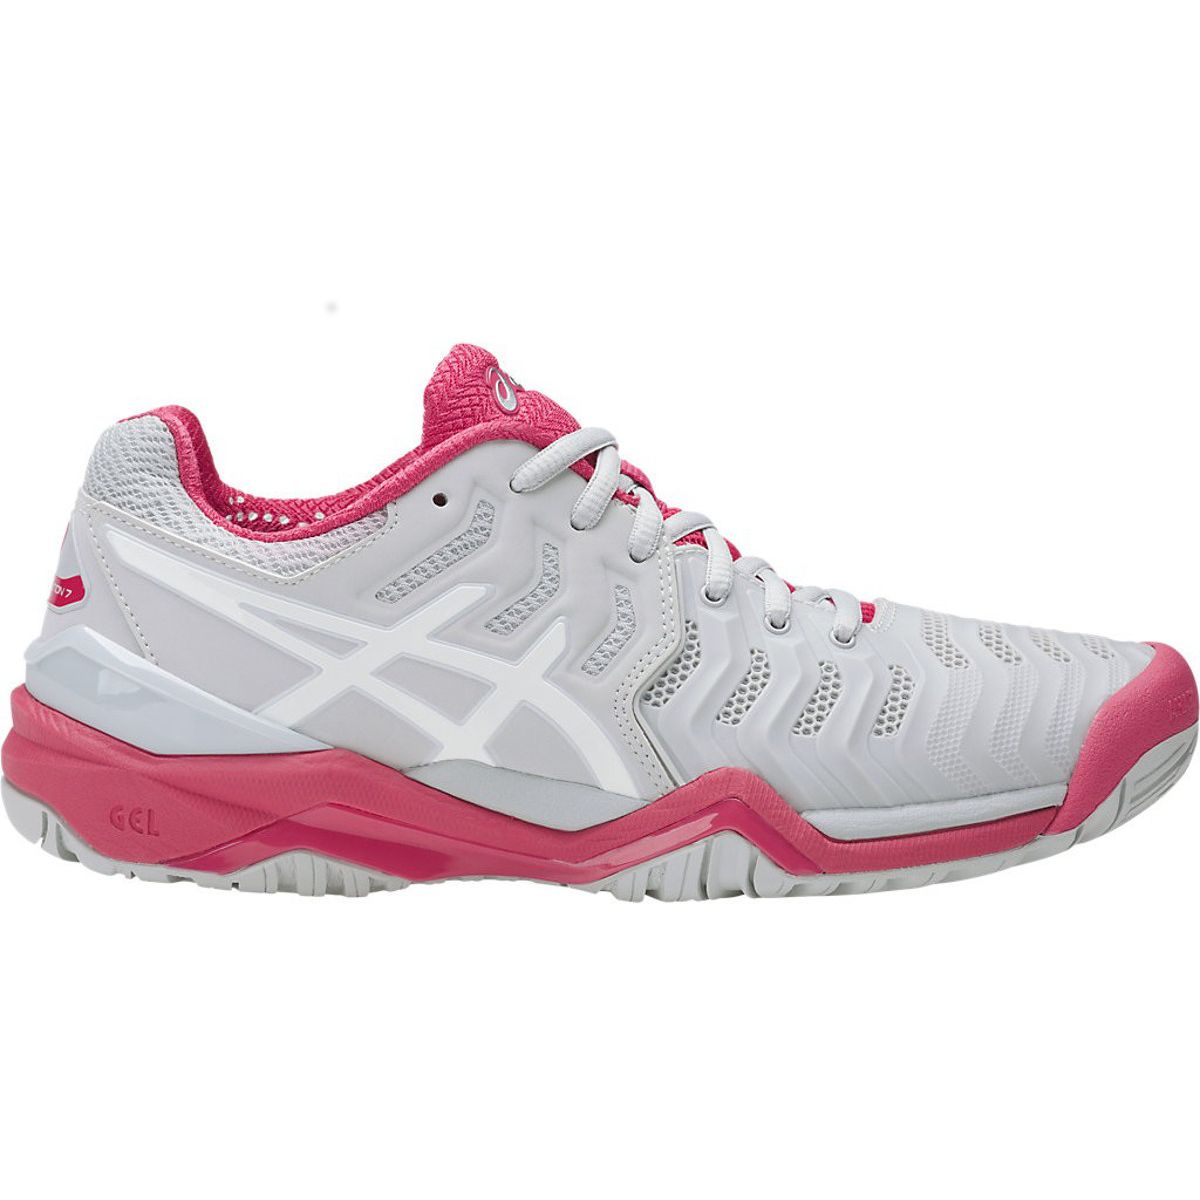 Asics Gel Resolution 7 Women's Tennis Shoes E751Y-9601